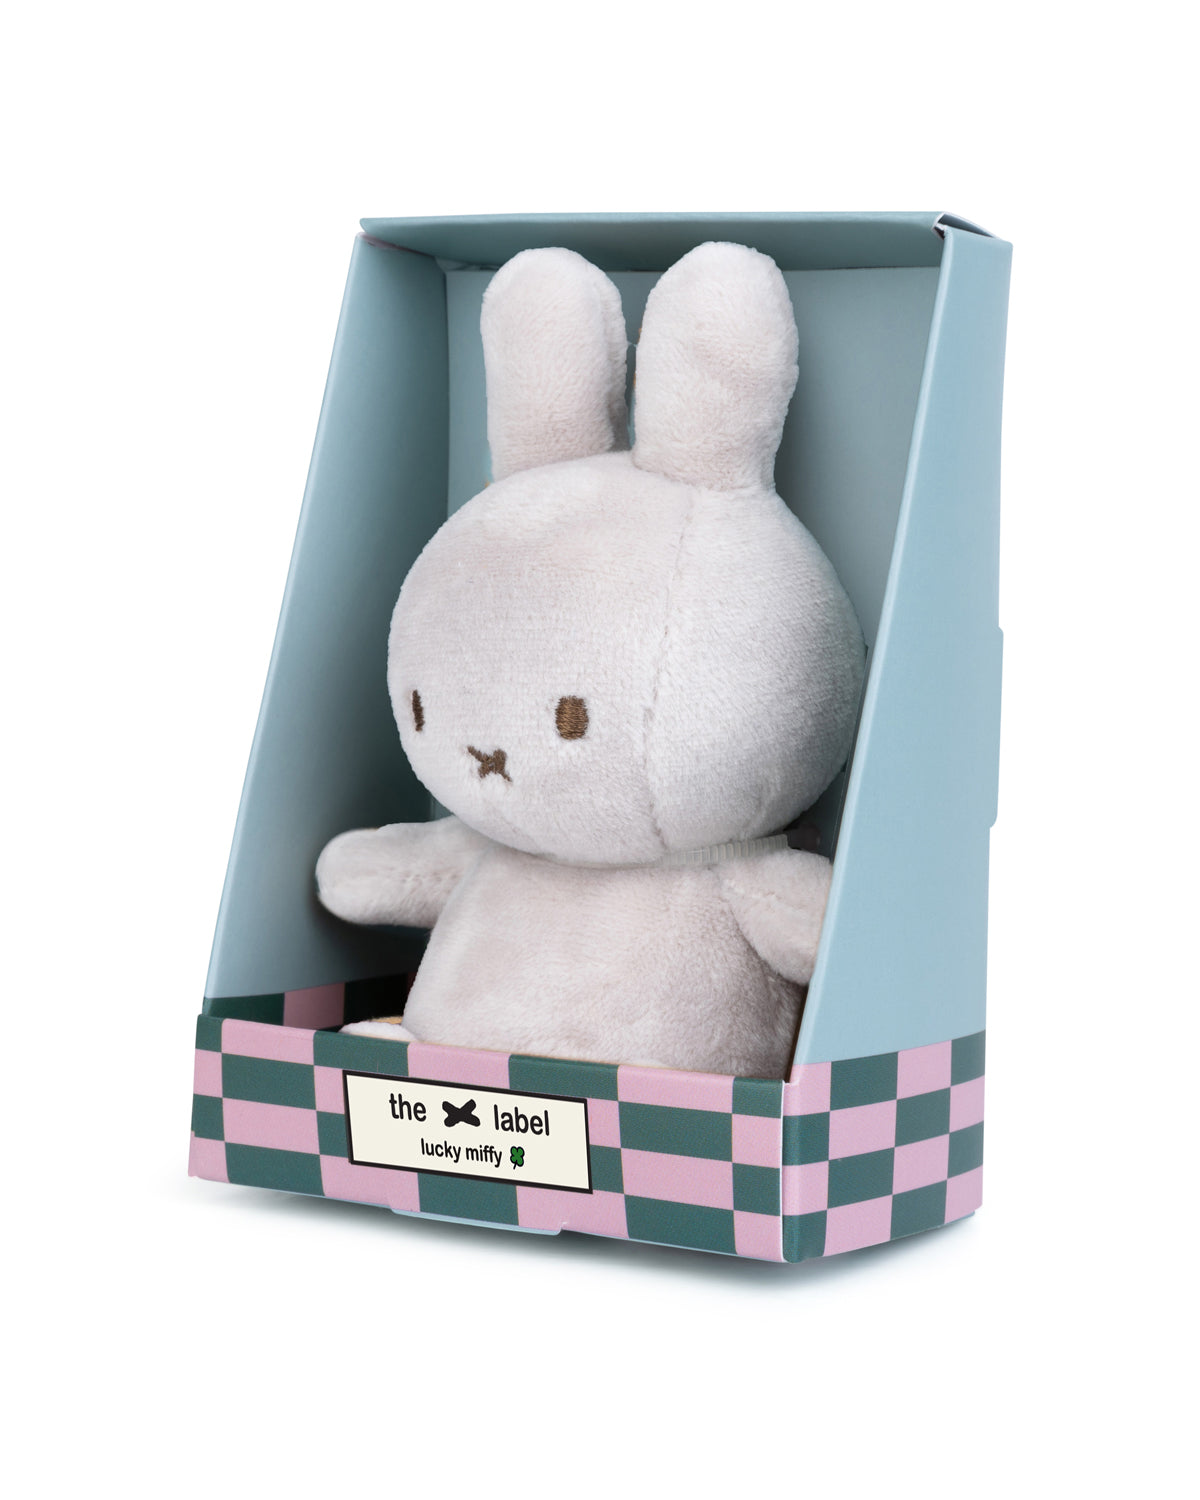 Plush MIFFY LUCKY Sitting in Giftbox 4"